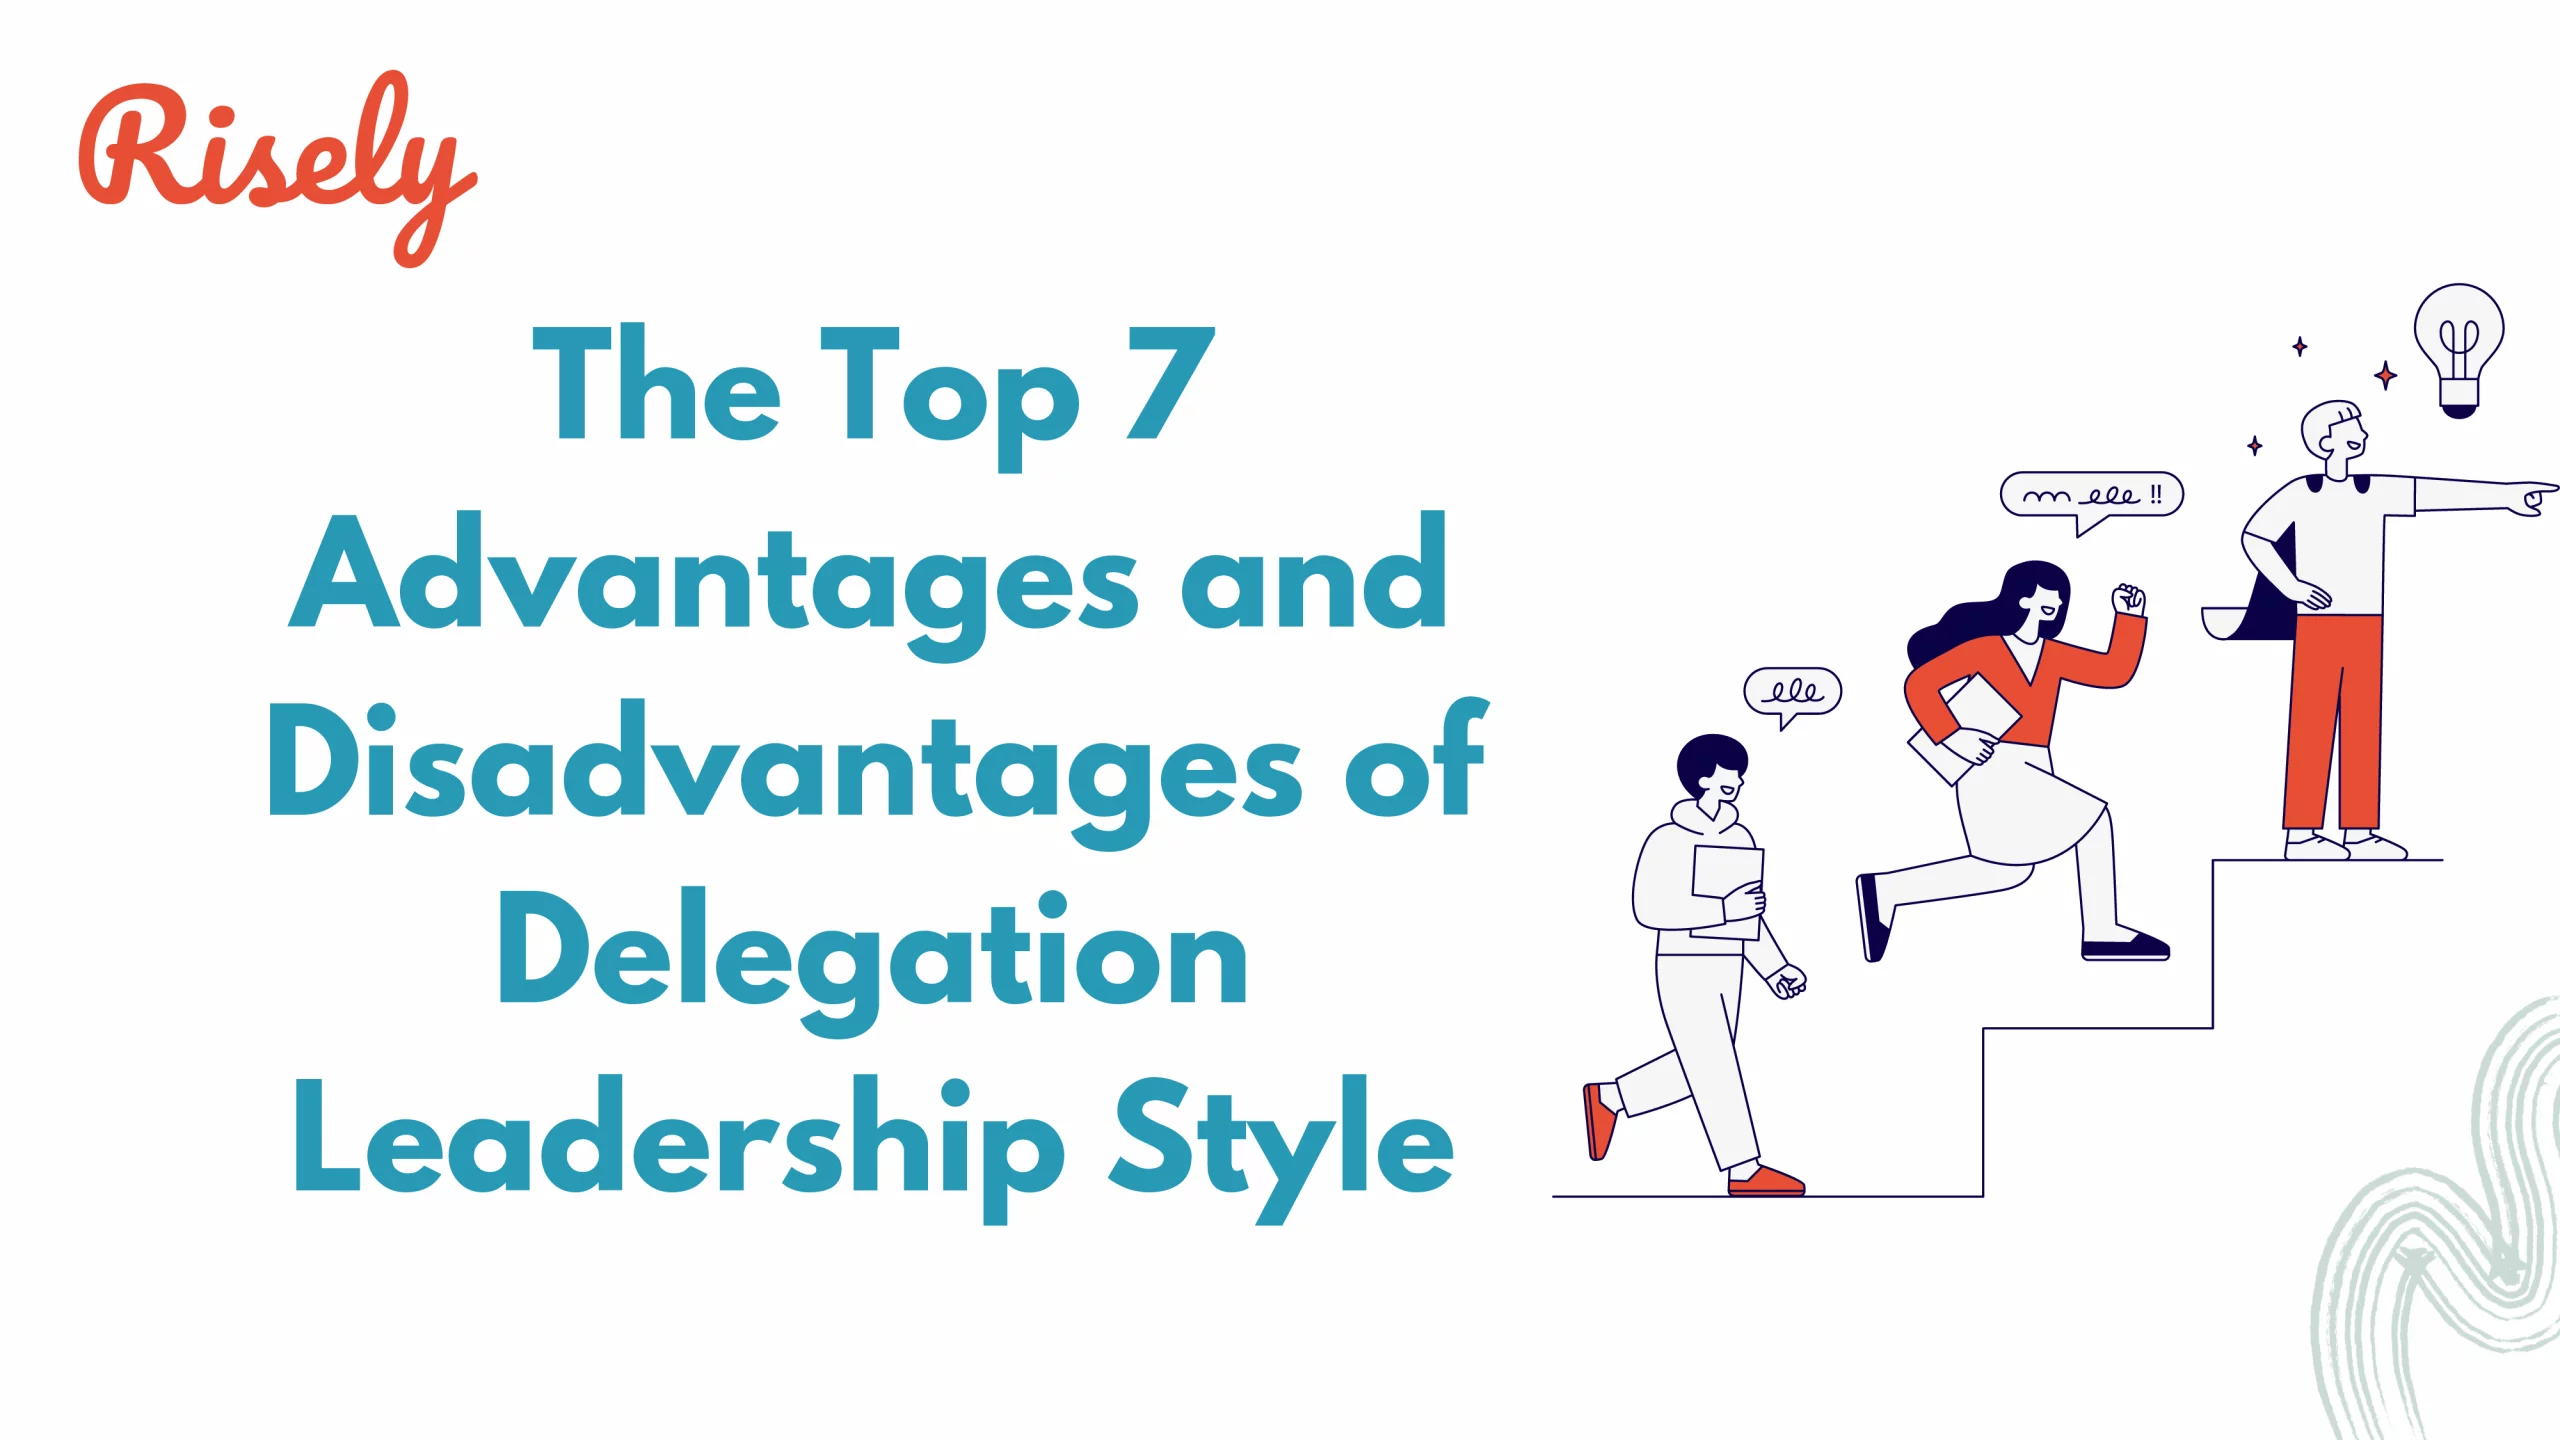 delegative leadership